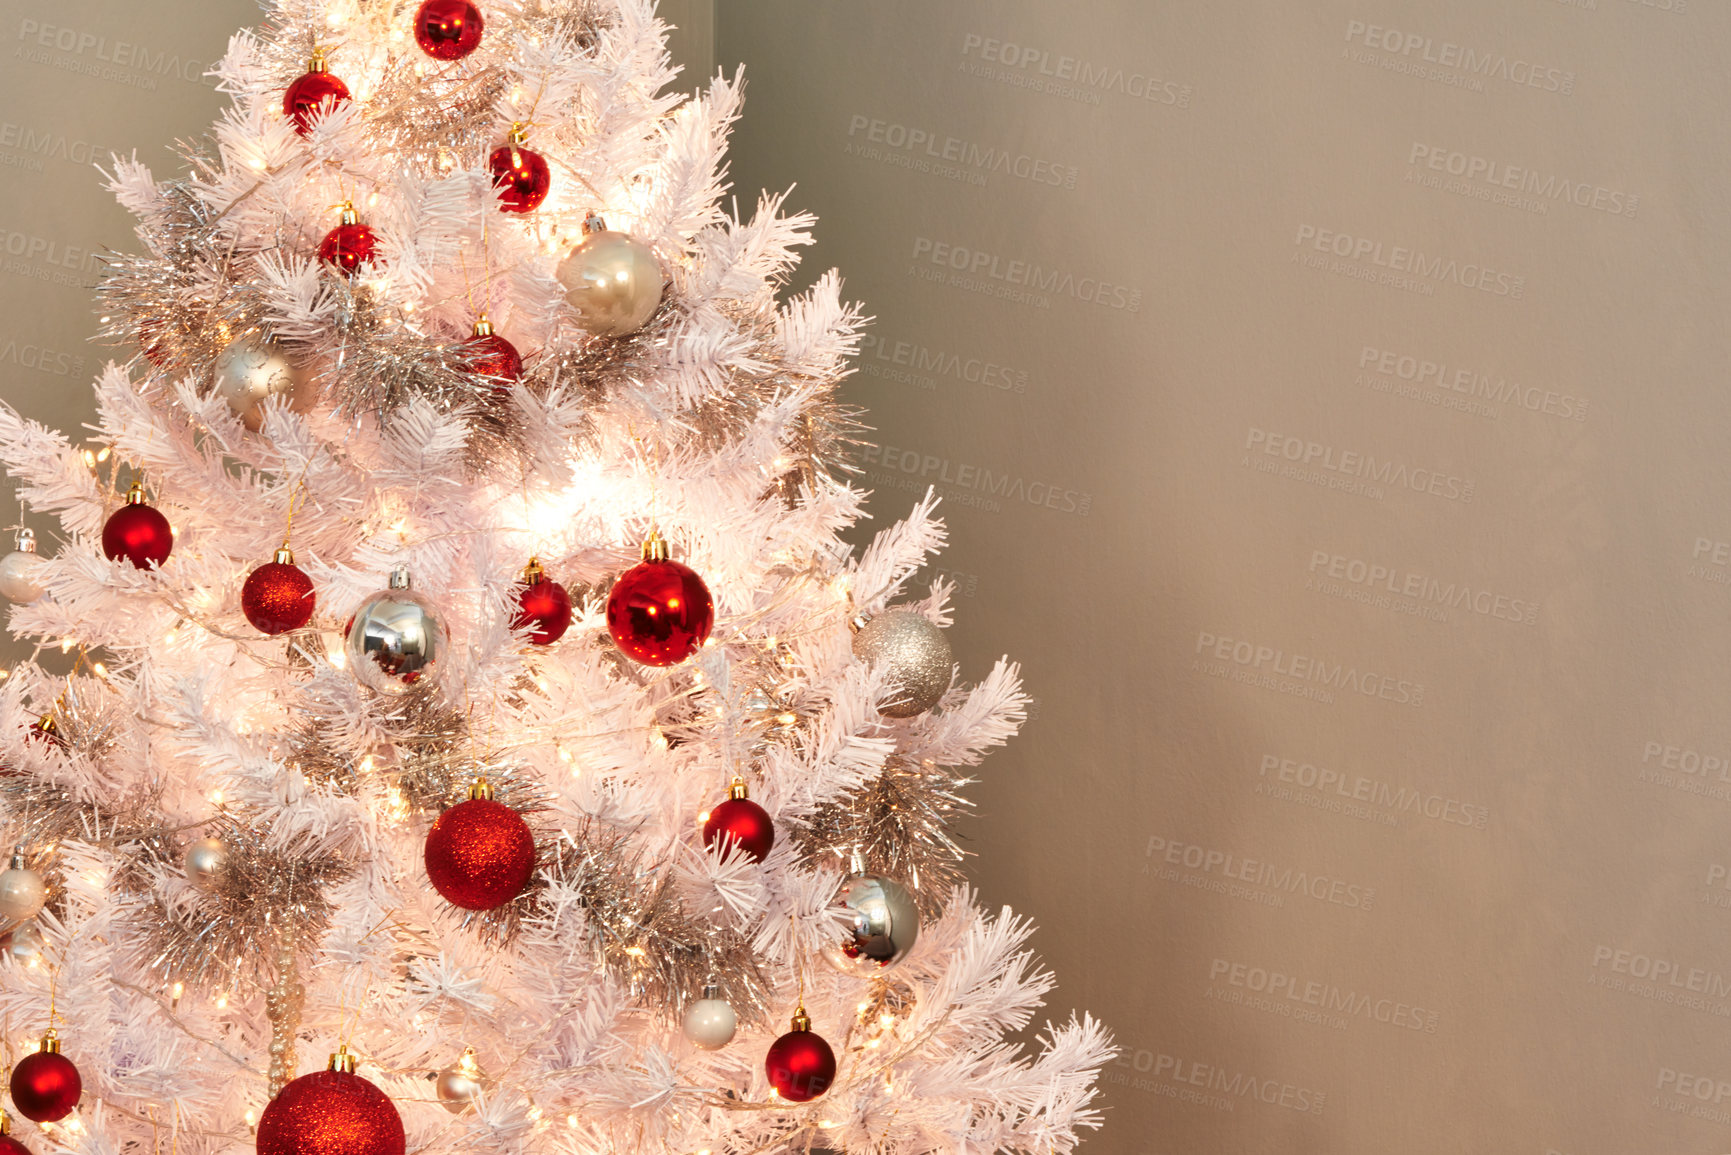 Buy stock photo Shot of a Christmas tree